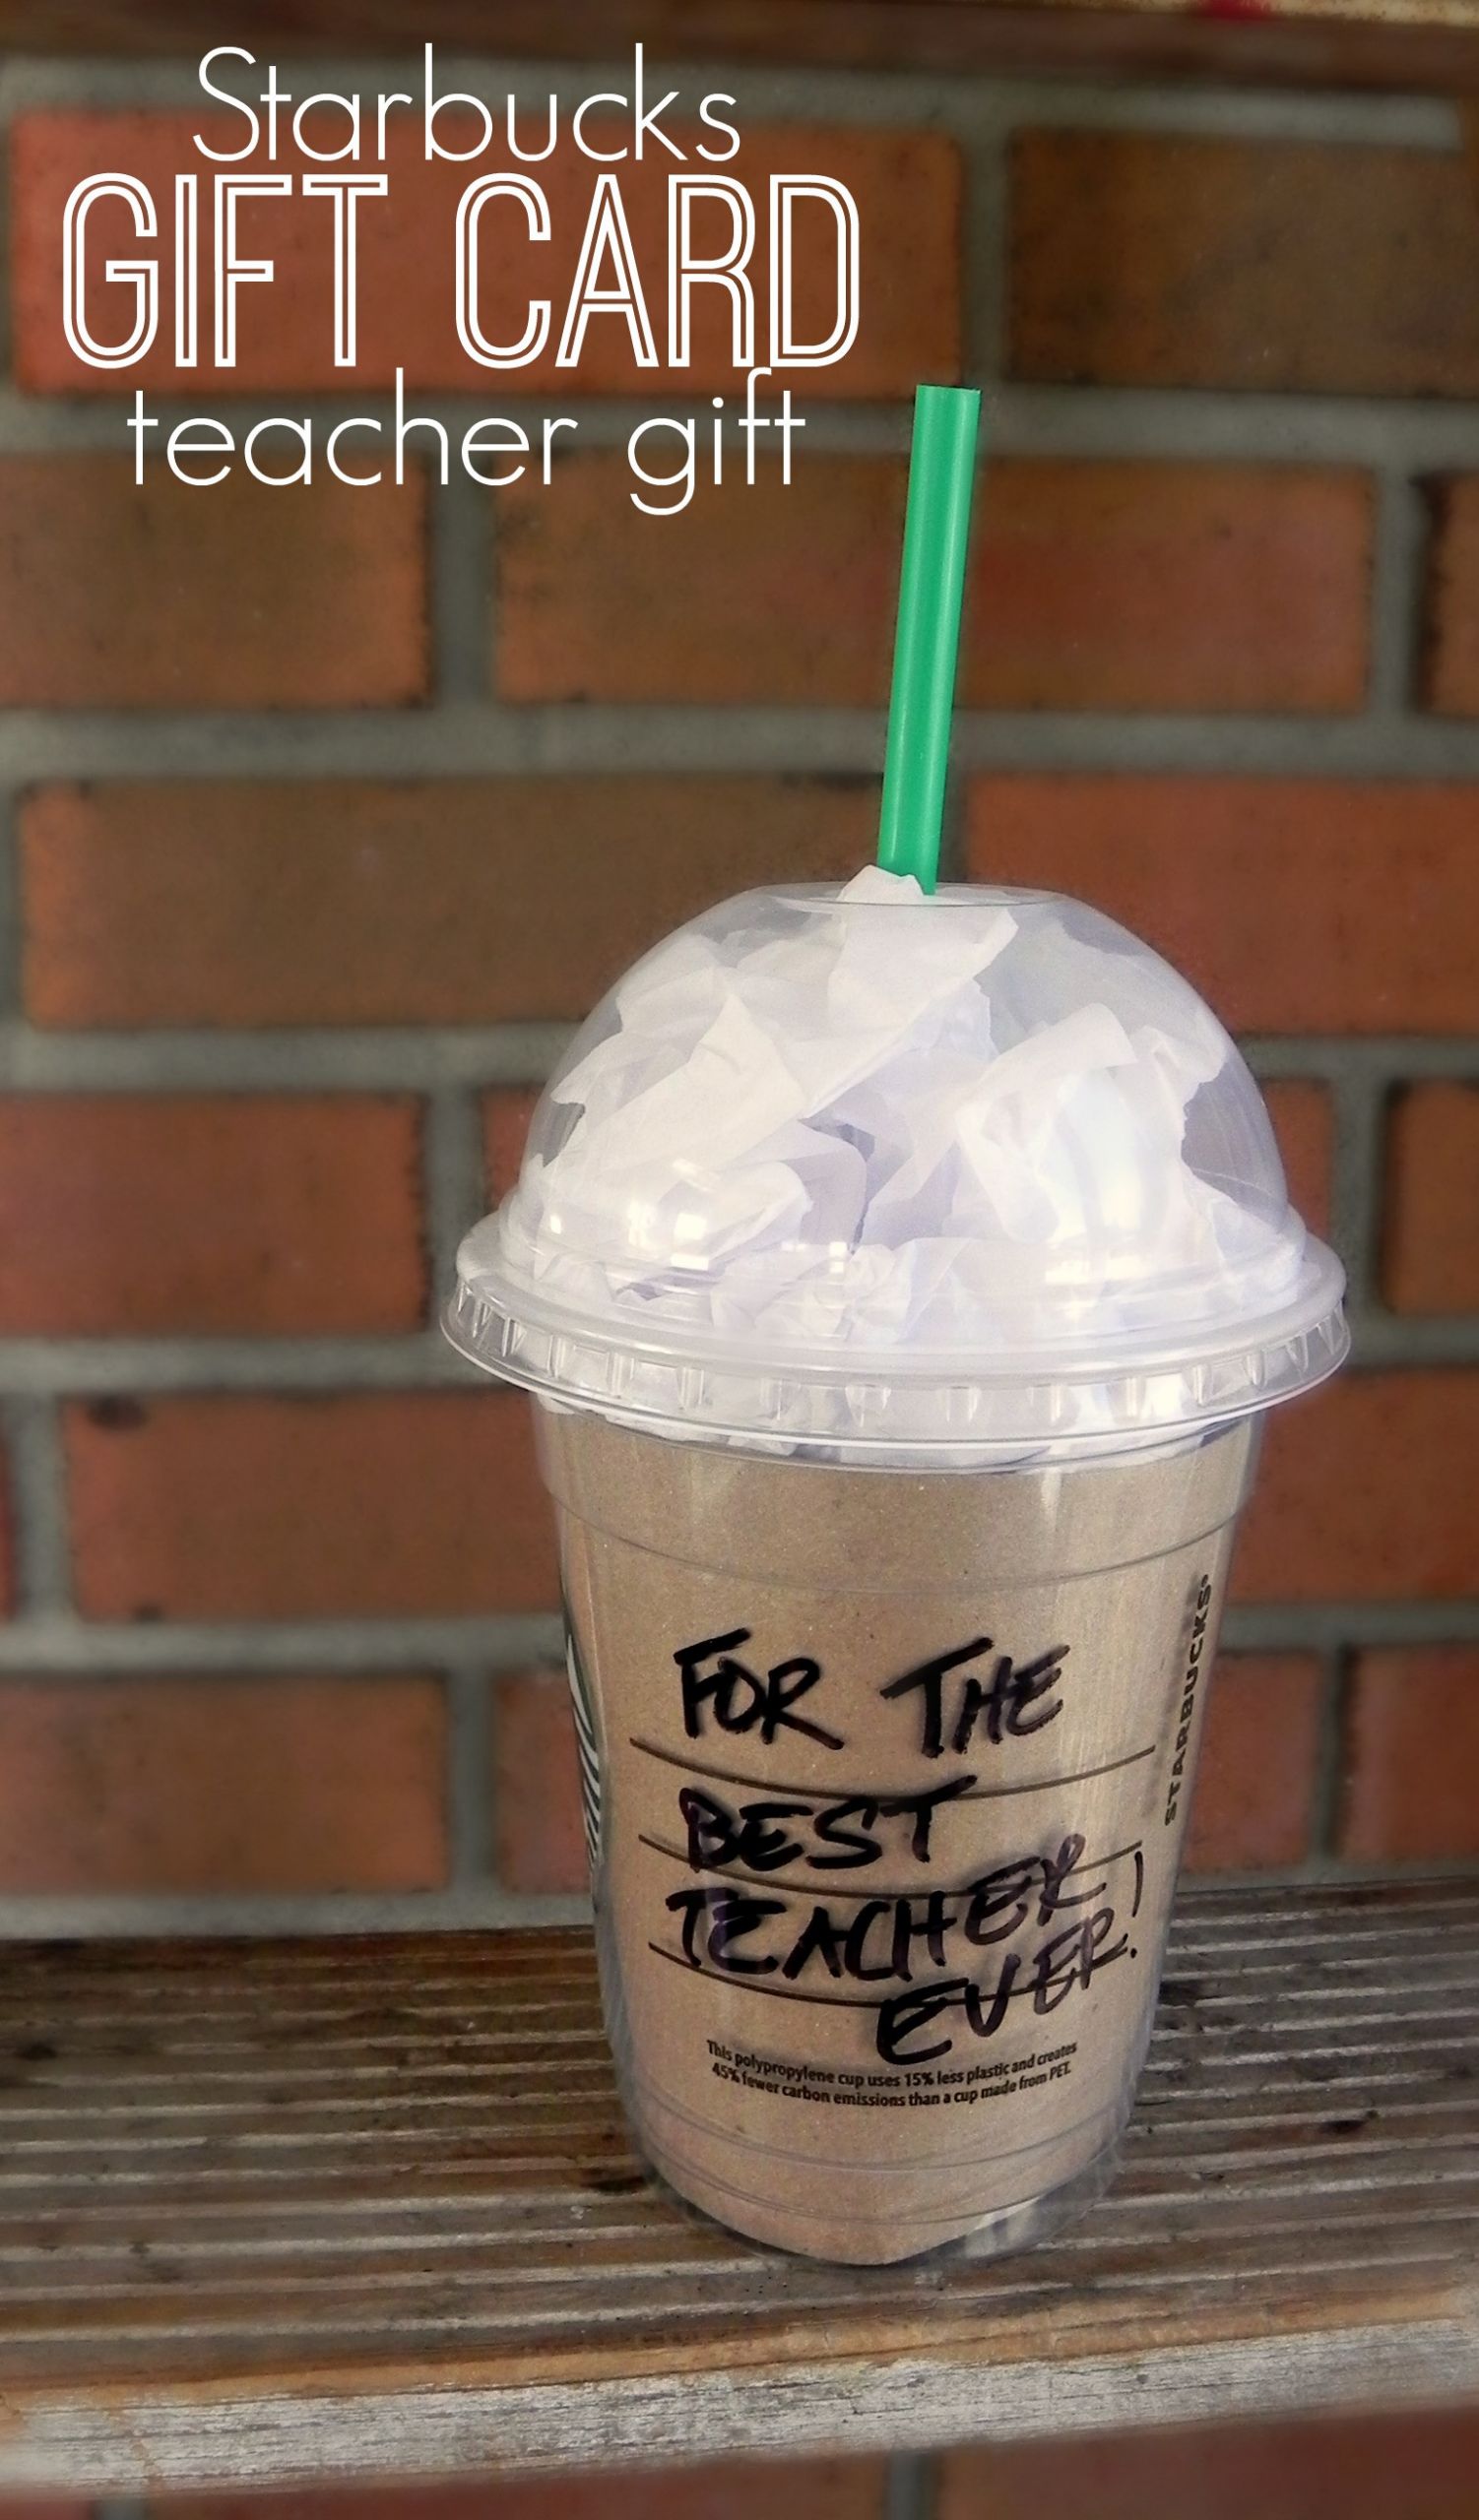 DIY Starbucks Gifts
 Starbucks Gift Card Teacher Gift Mad in Crafts